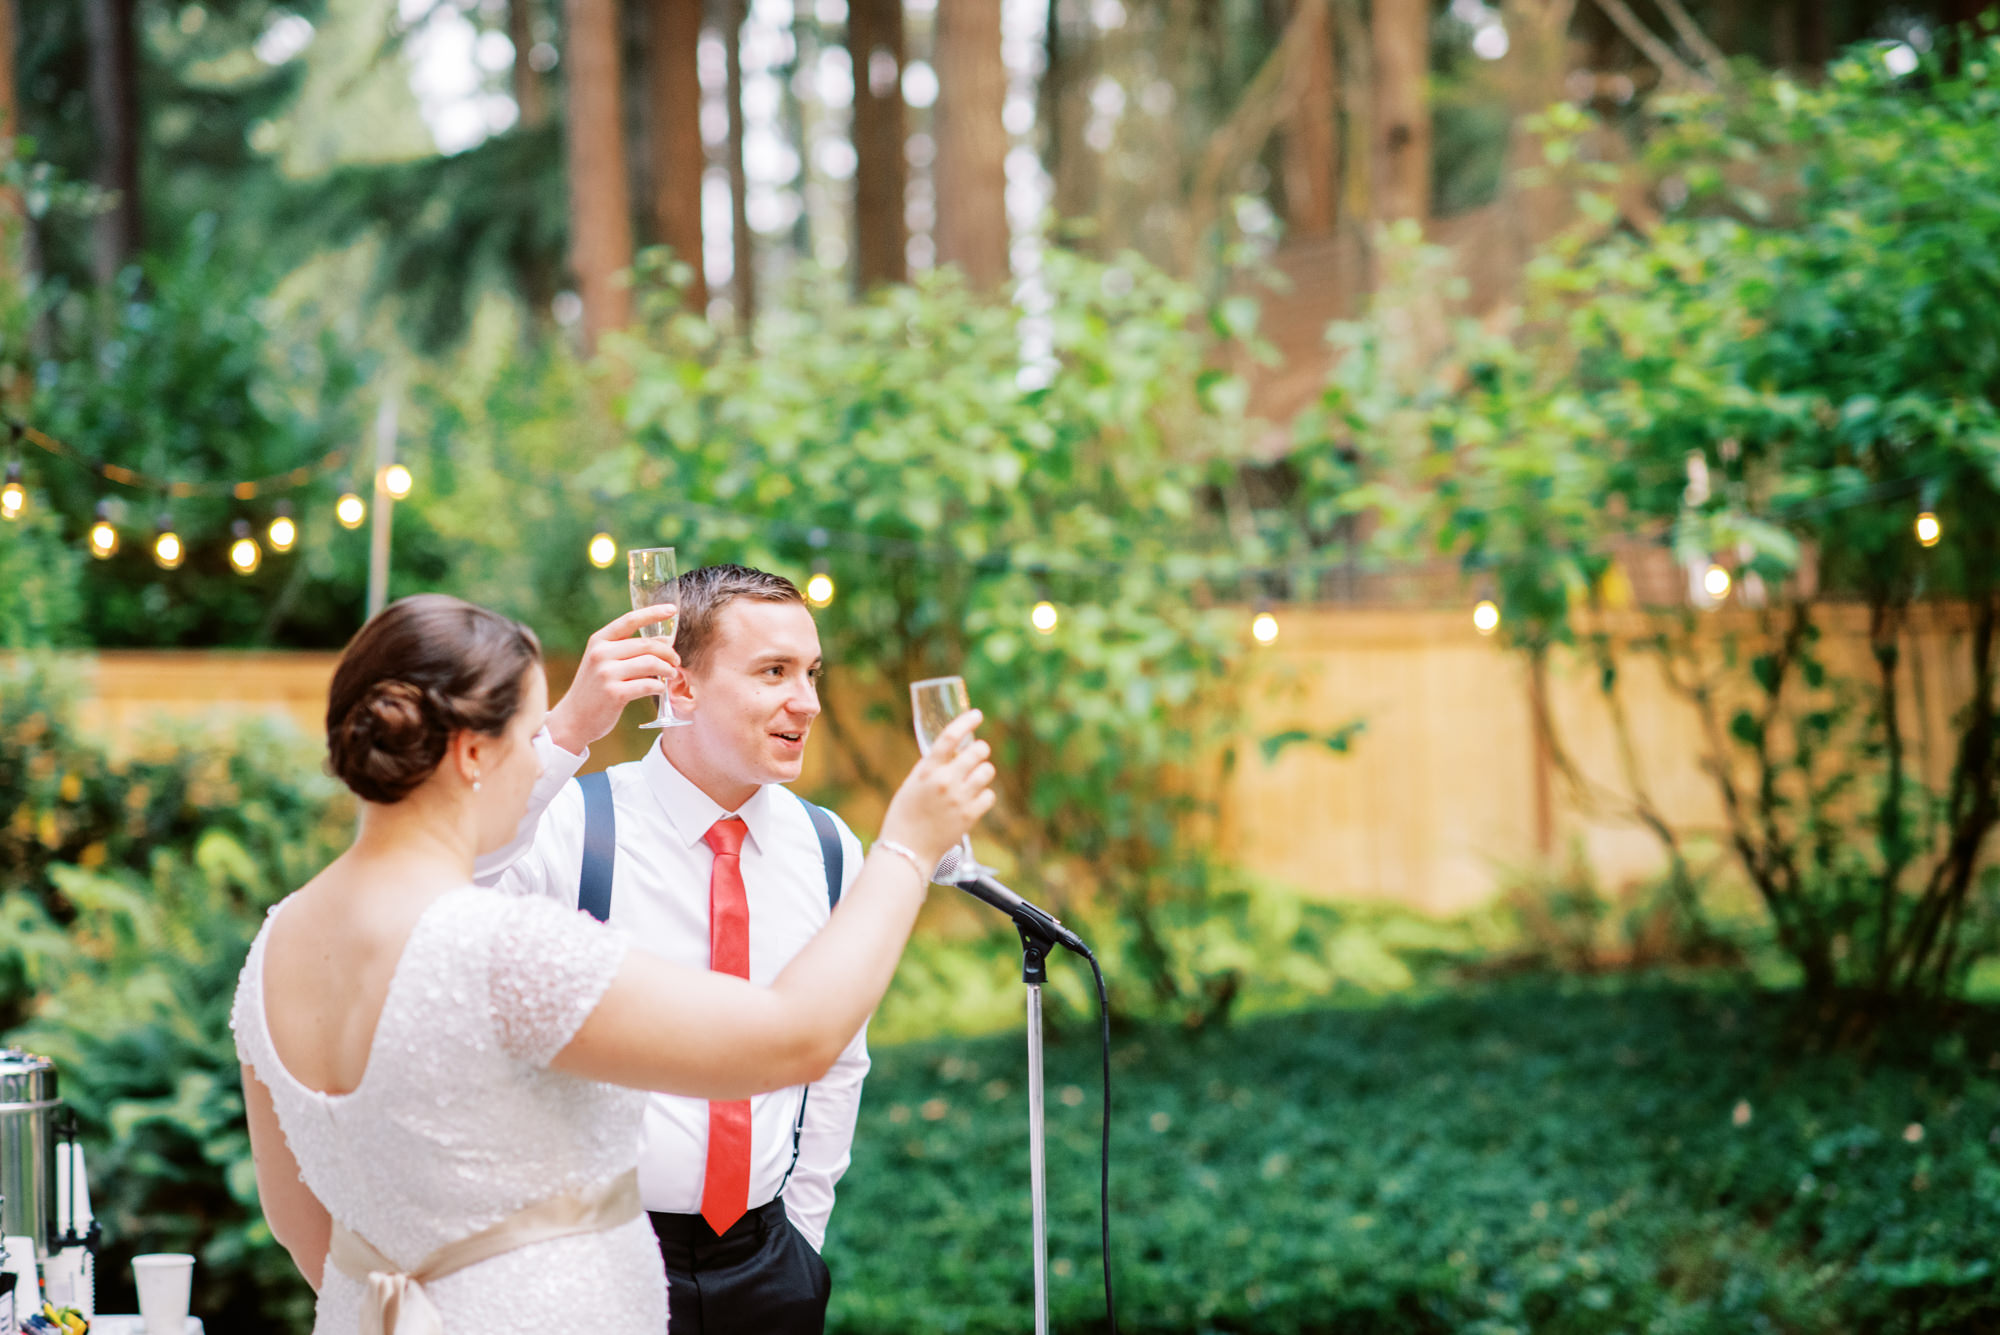 Seattle Backyard Wedding: Hannah and Jacob wedding reception moments